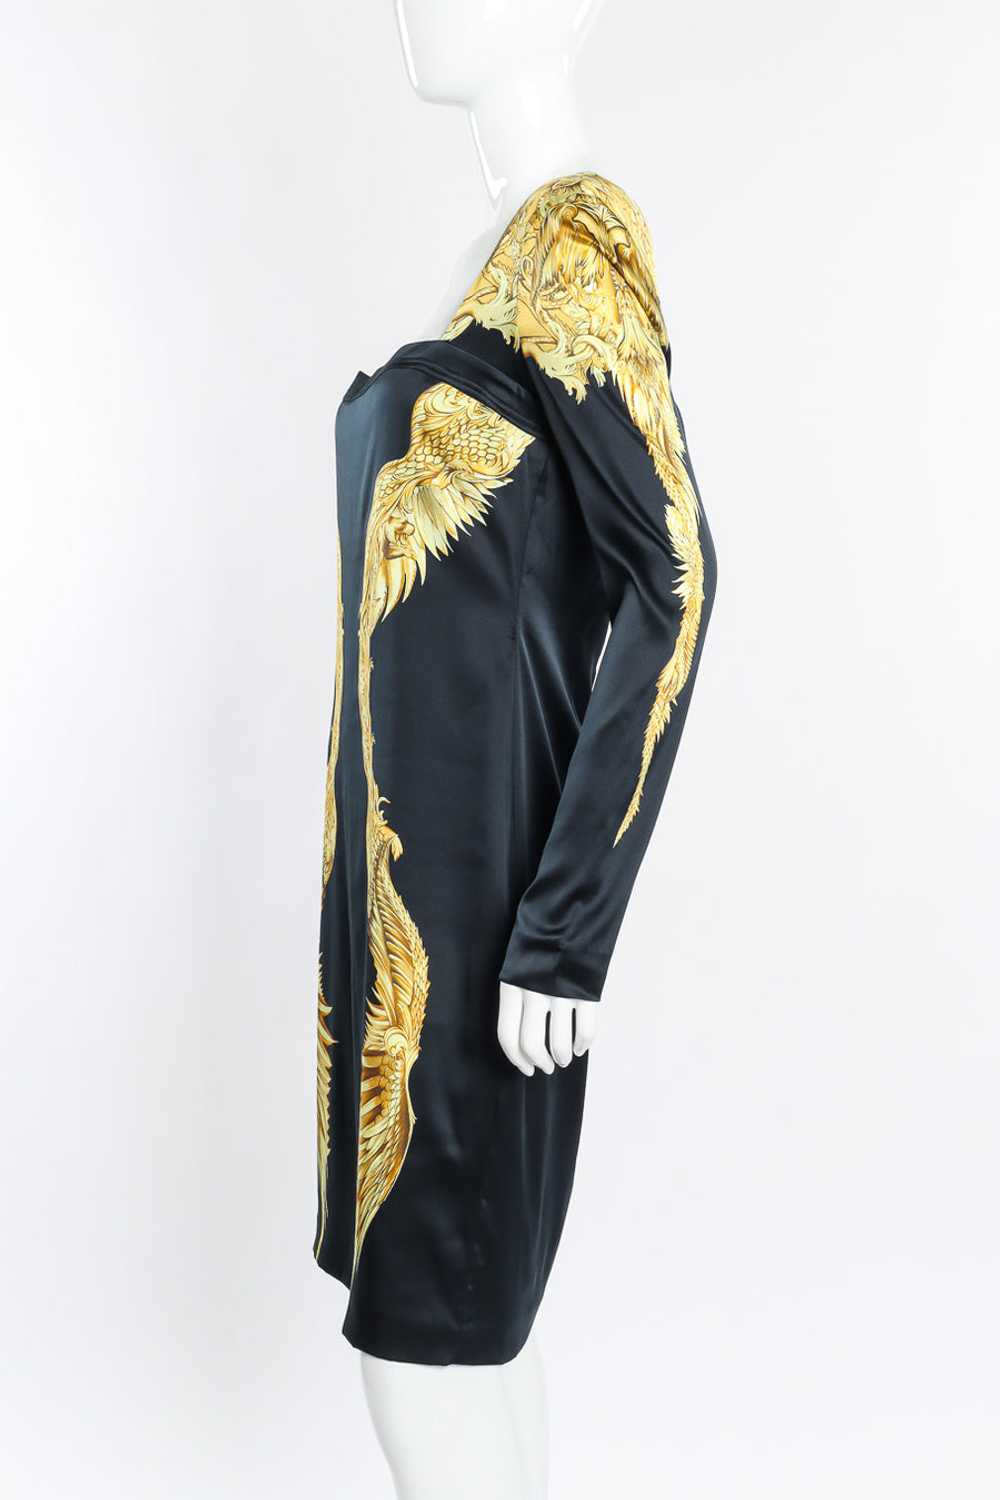 ROBERTO CAVALLI Baroque Wings Graphic Silk Dress - image 4